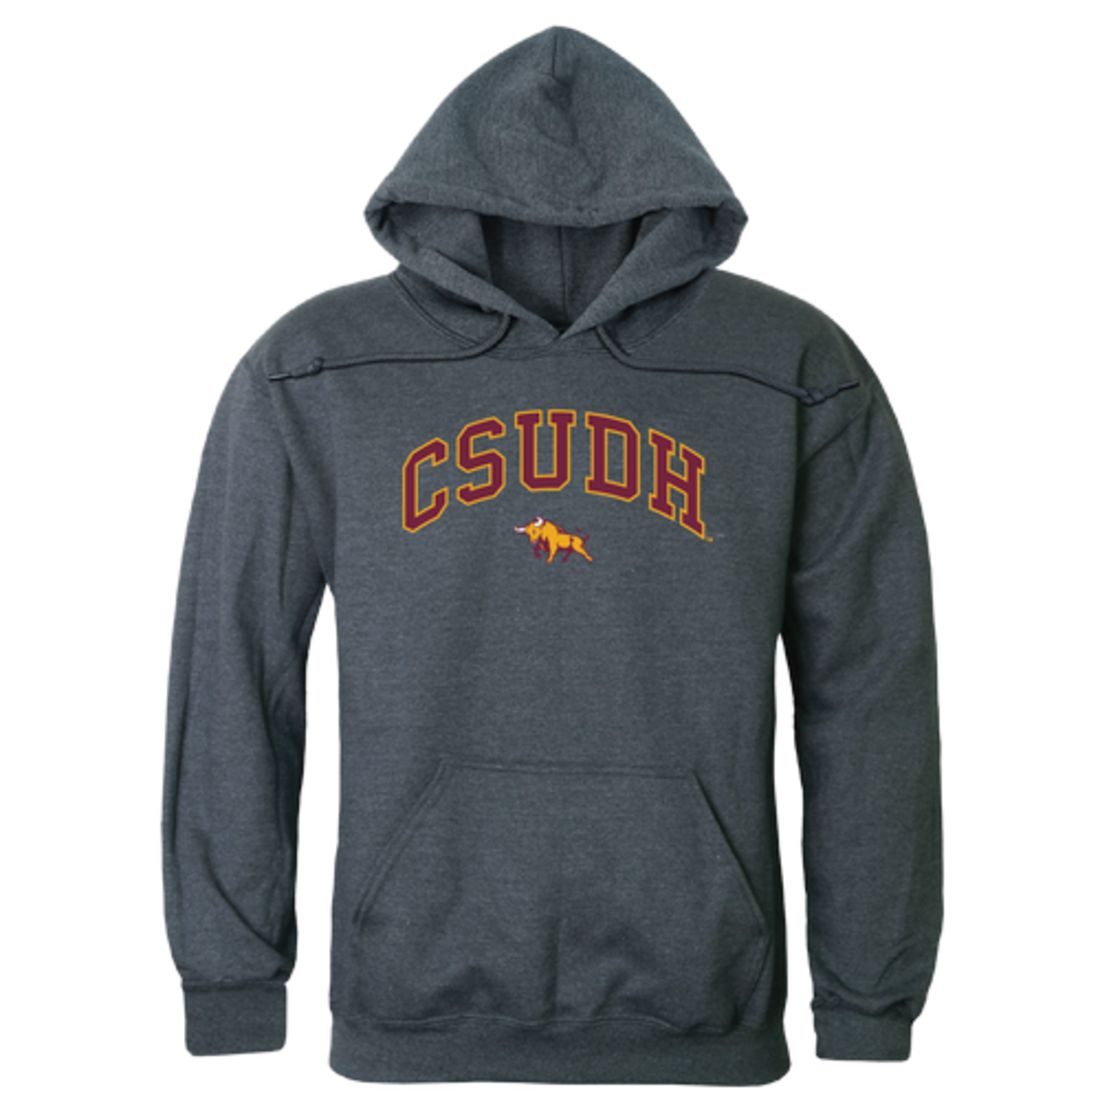 CSUDH California State University Dominguez Hills Toros Campus Fleece Hoodie Sweatshirts